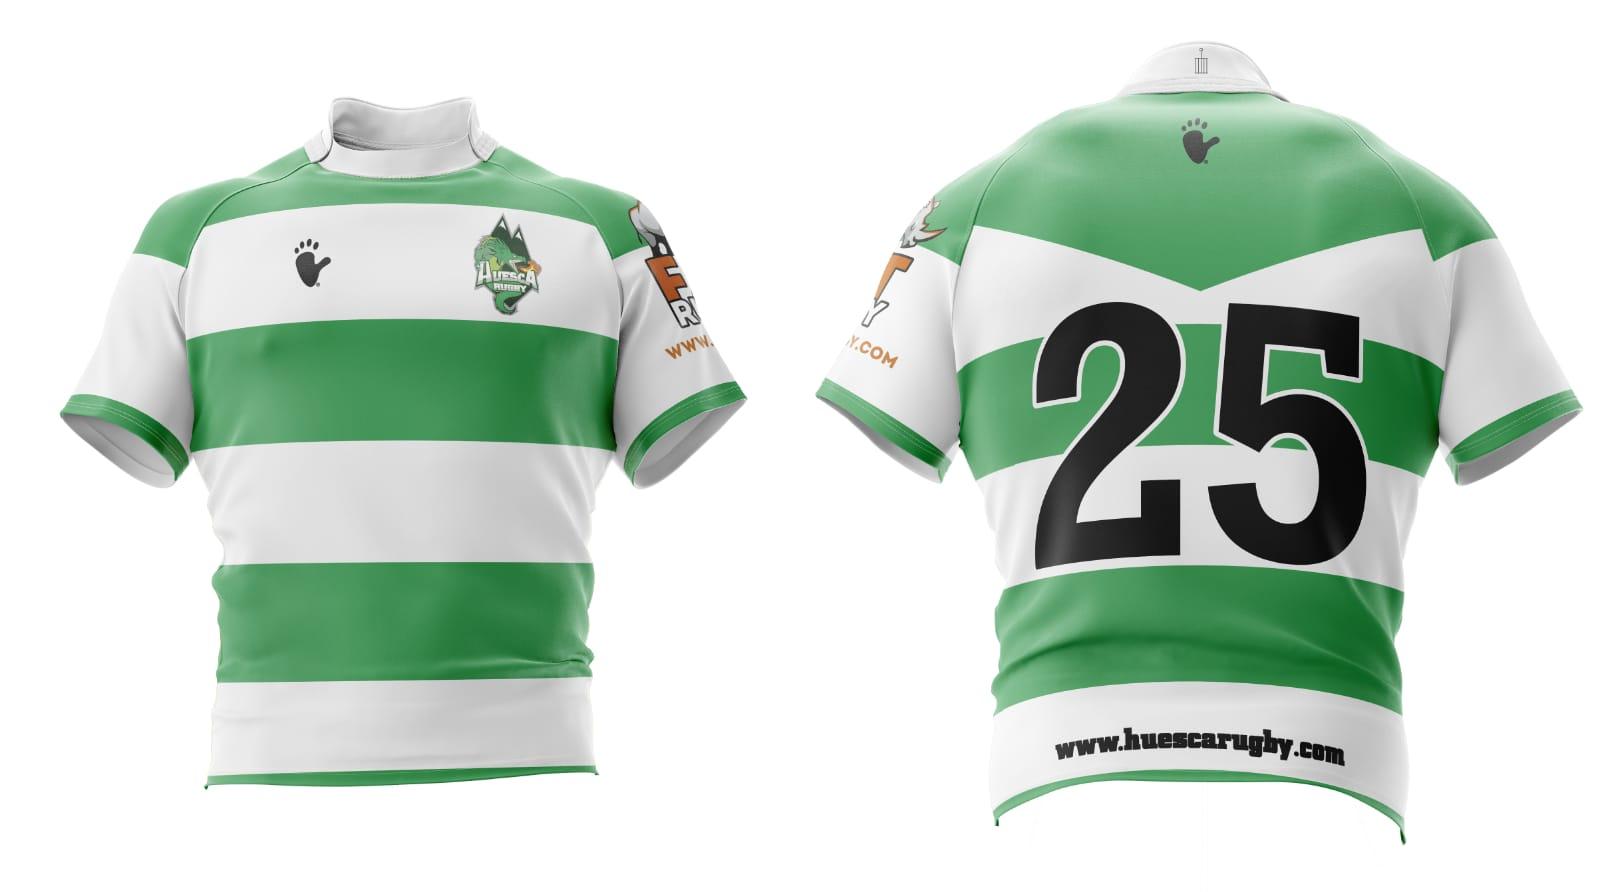 Camiseta Juego Huesca Rugby - Talla S